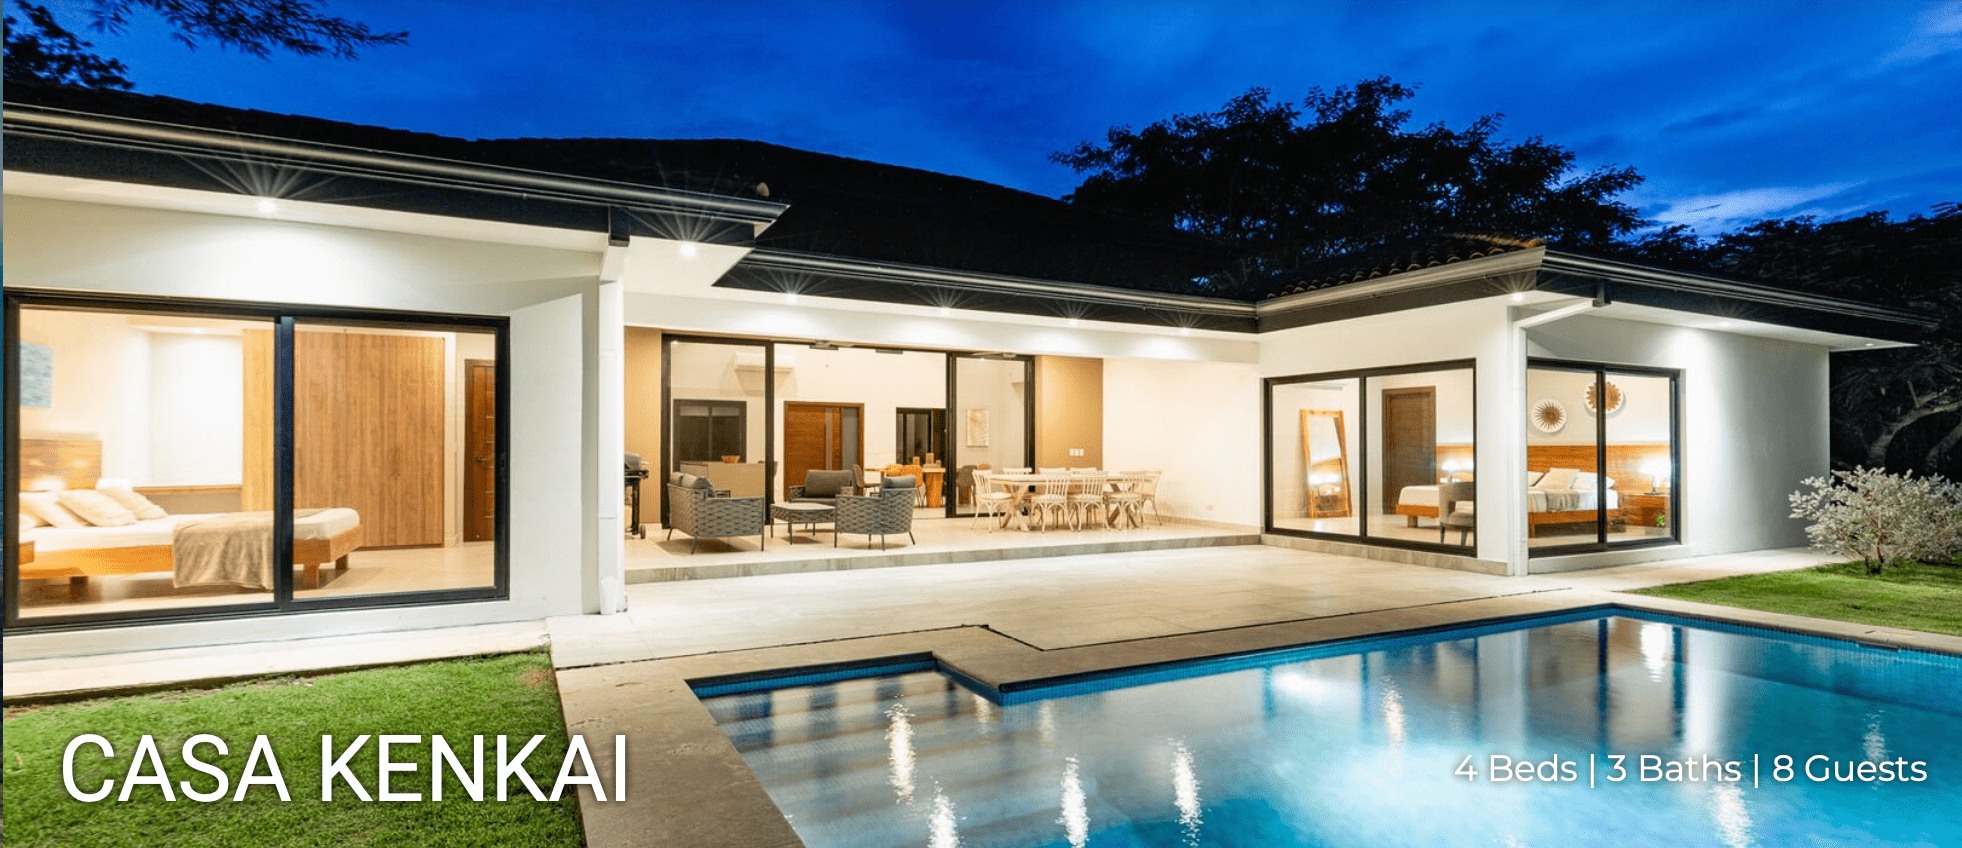 Casa Kenkai luxury vacation home in Costa Rica